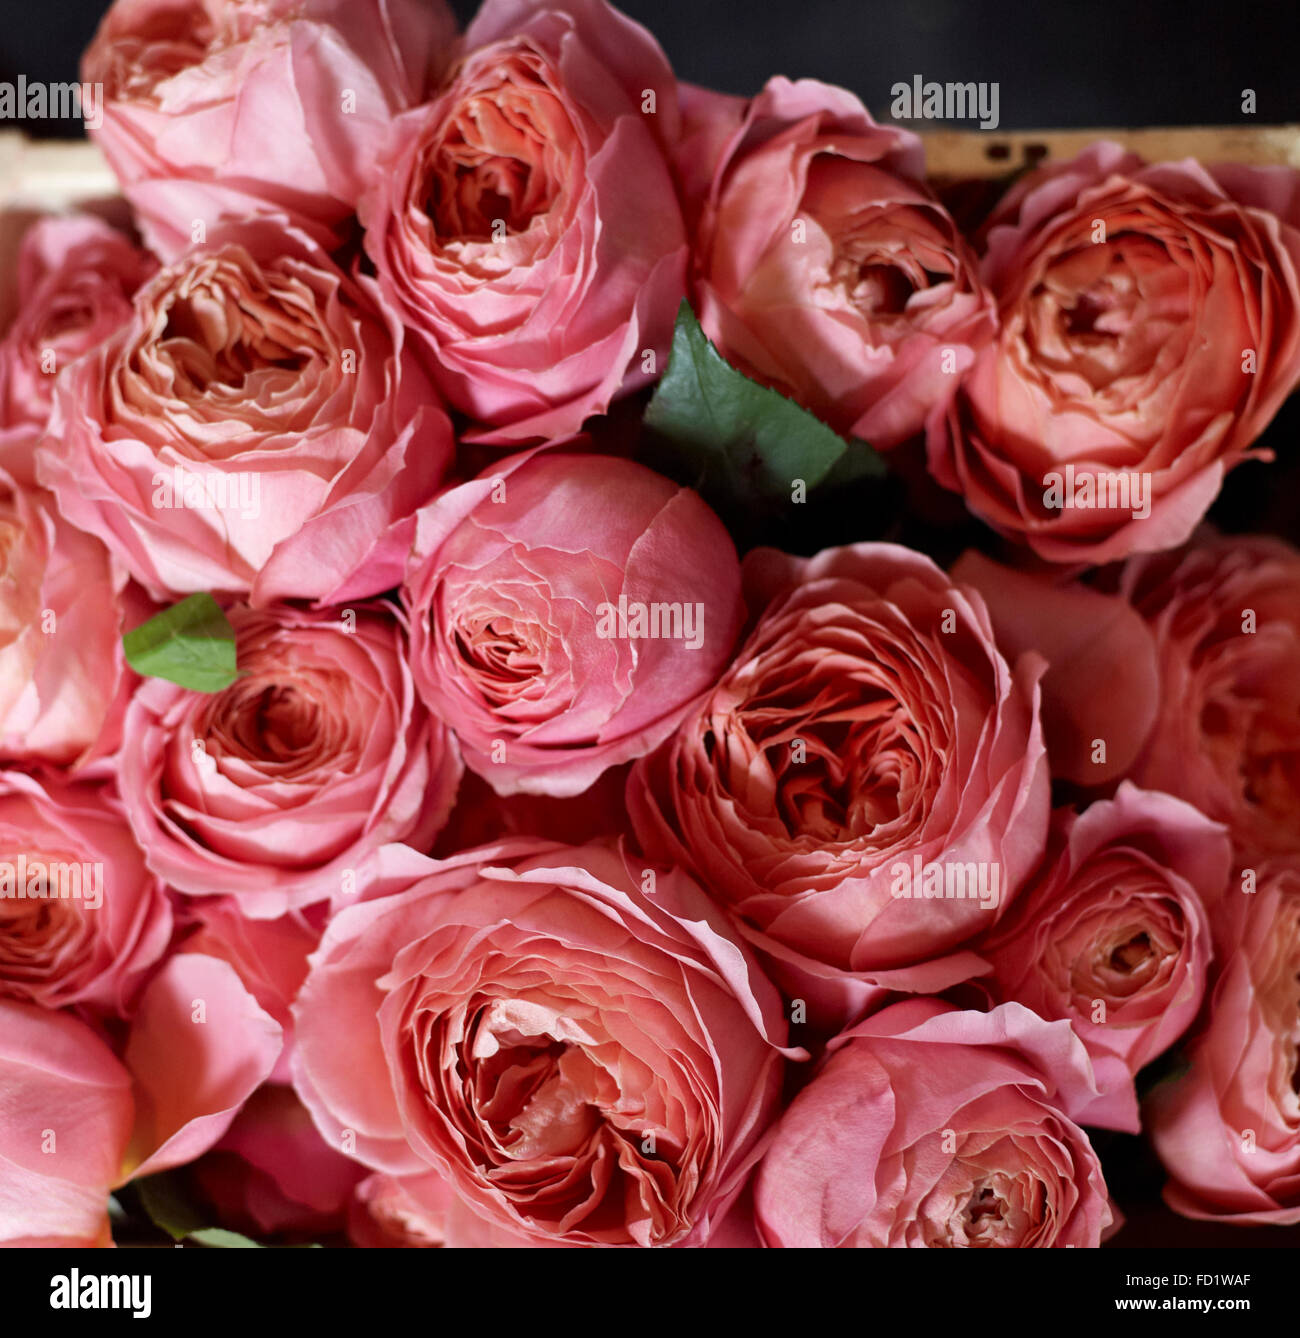 Rosa bouquet di rose Foto Stock